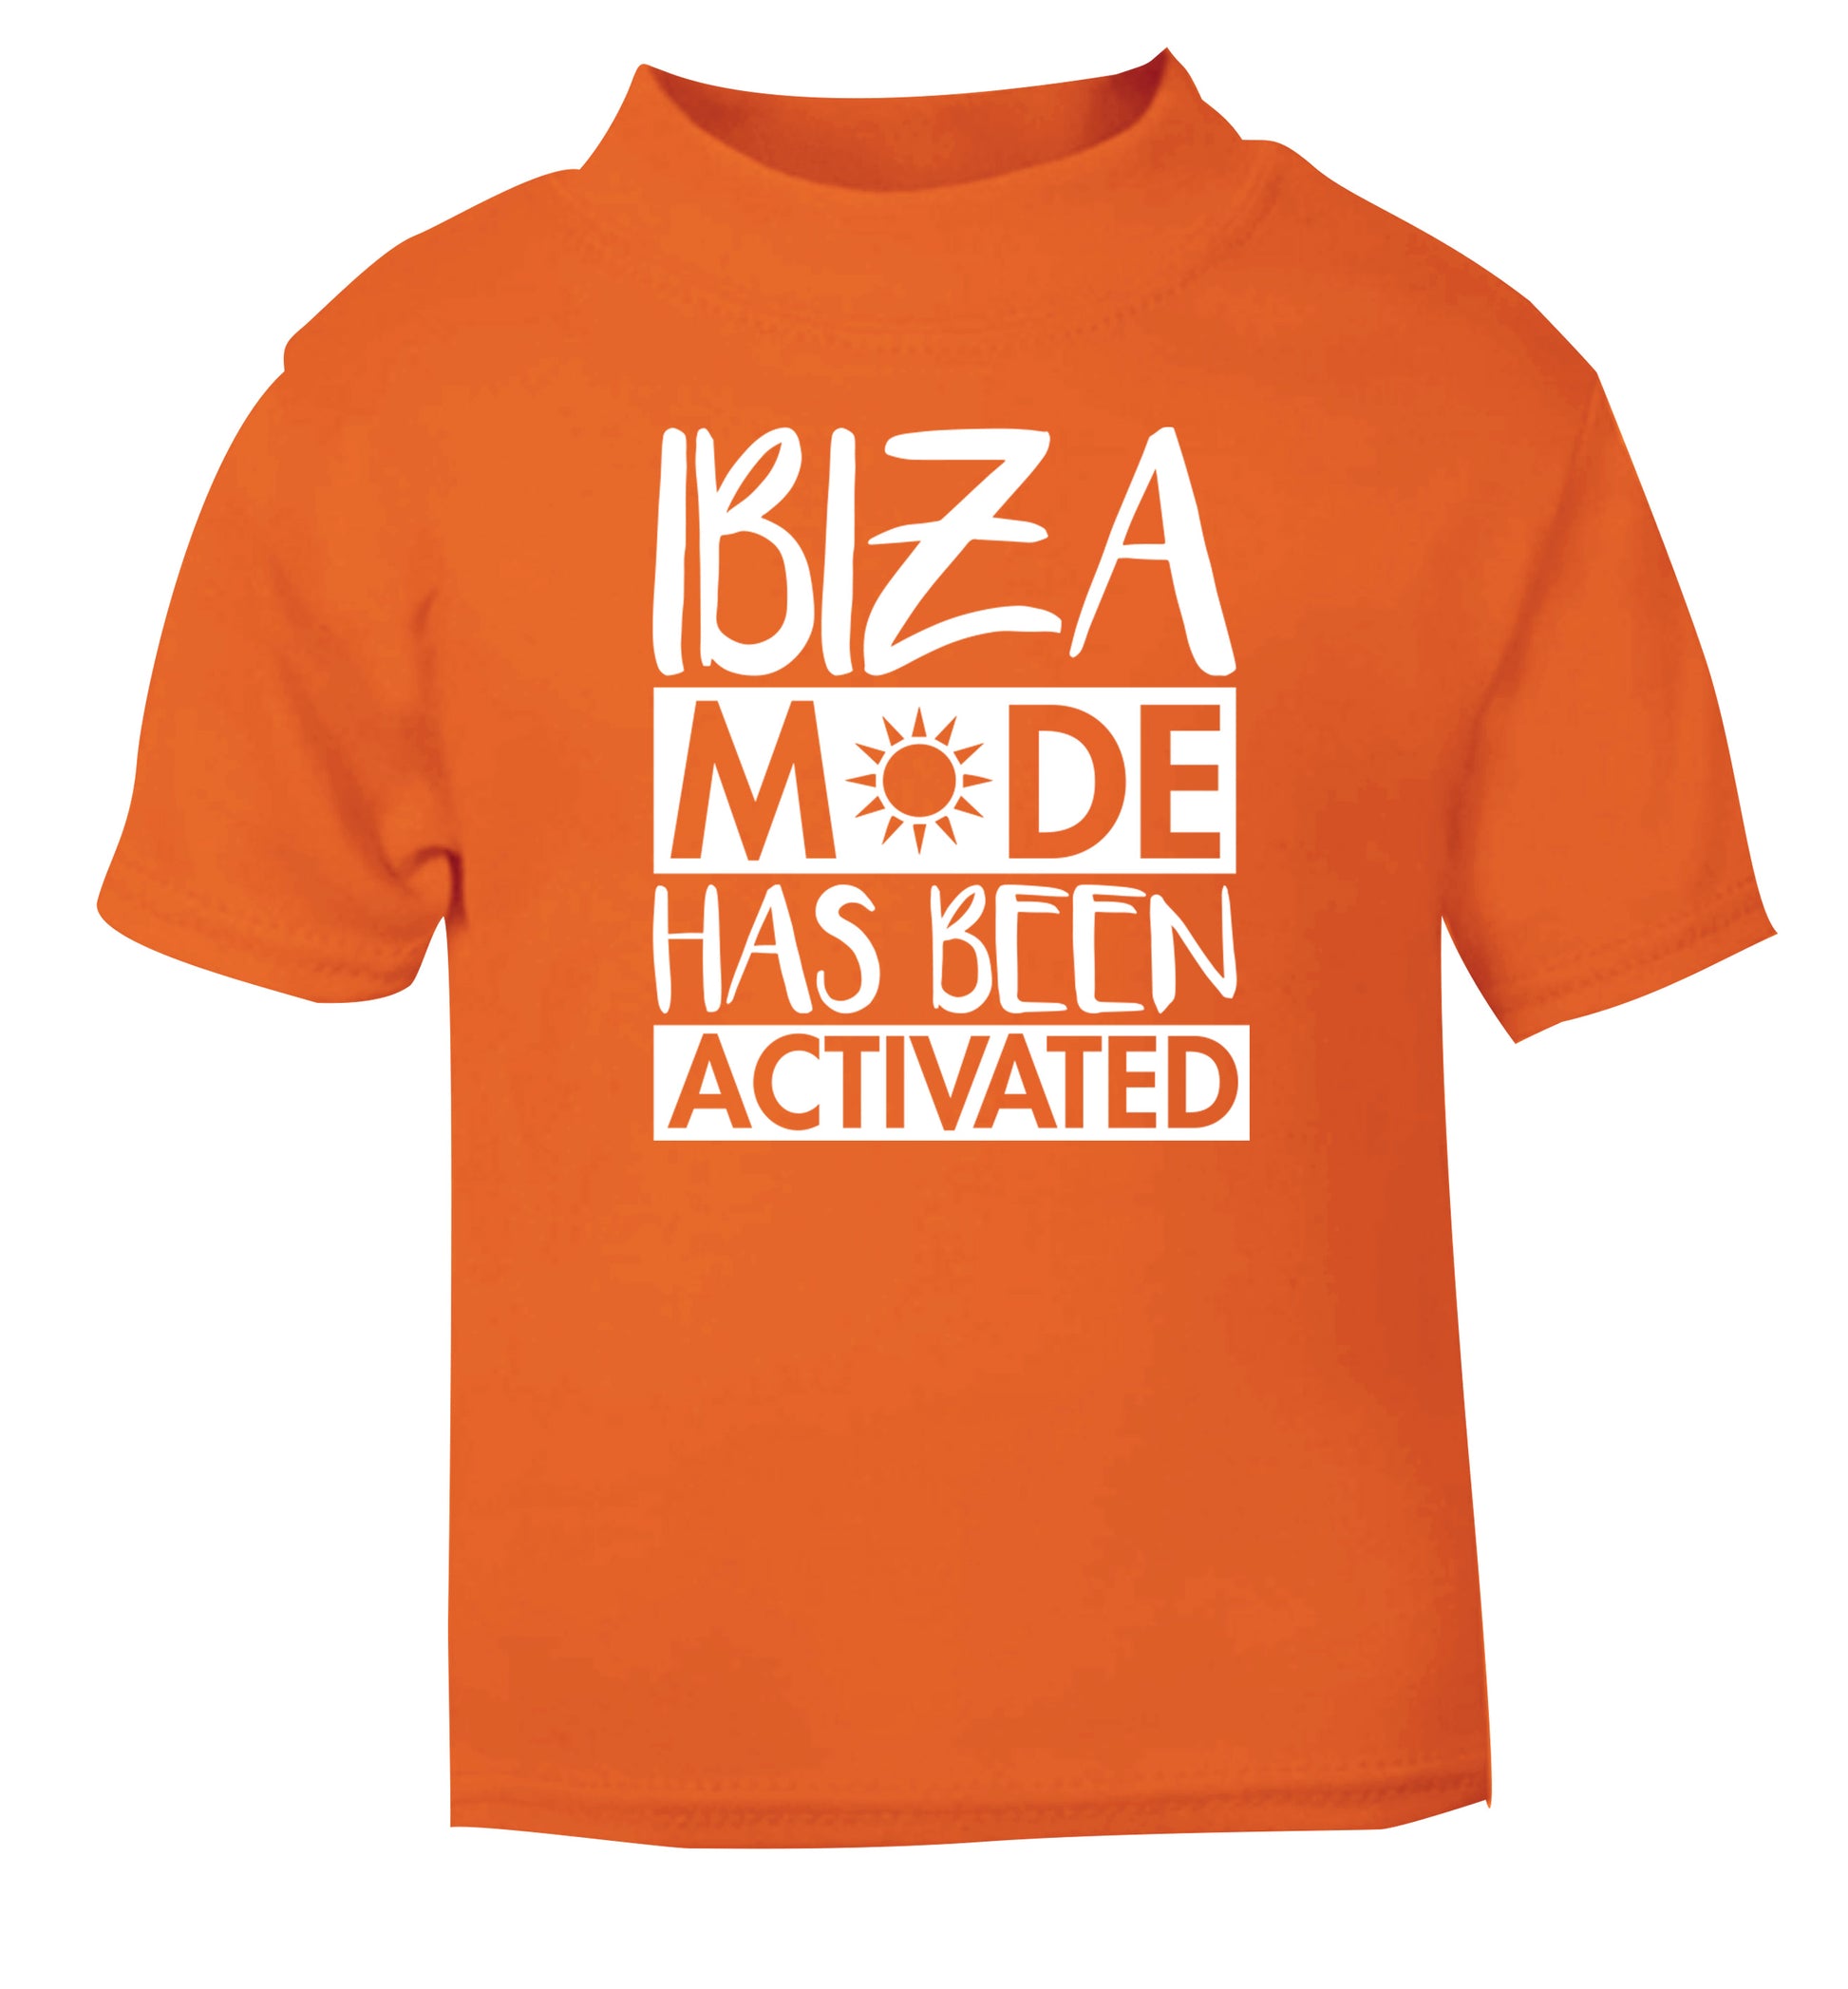 Ibiza mode has been activated orange Baby Toddler Tshirt 2 Years